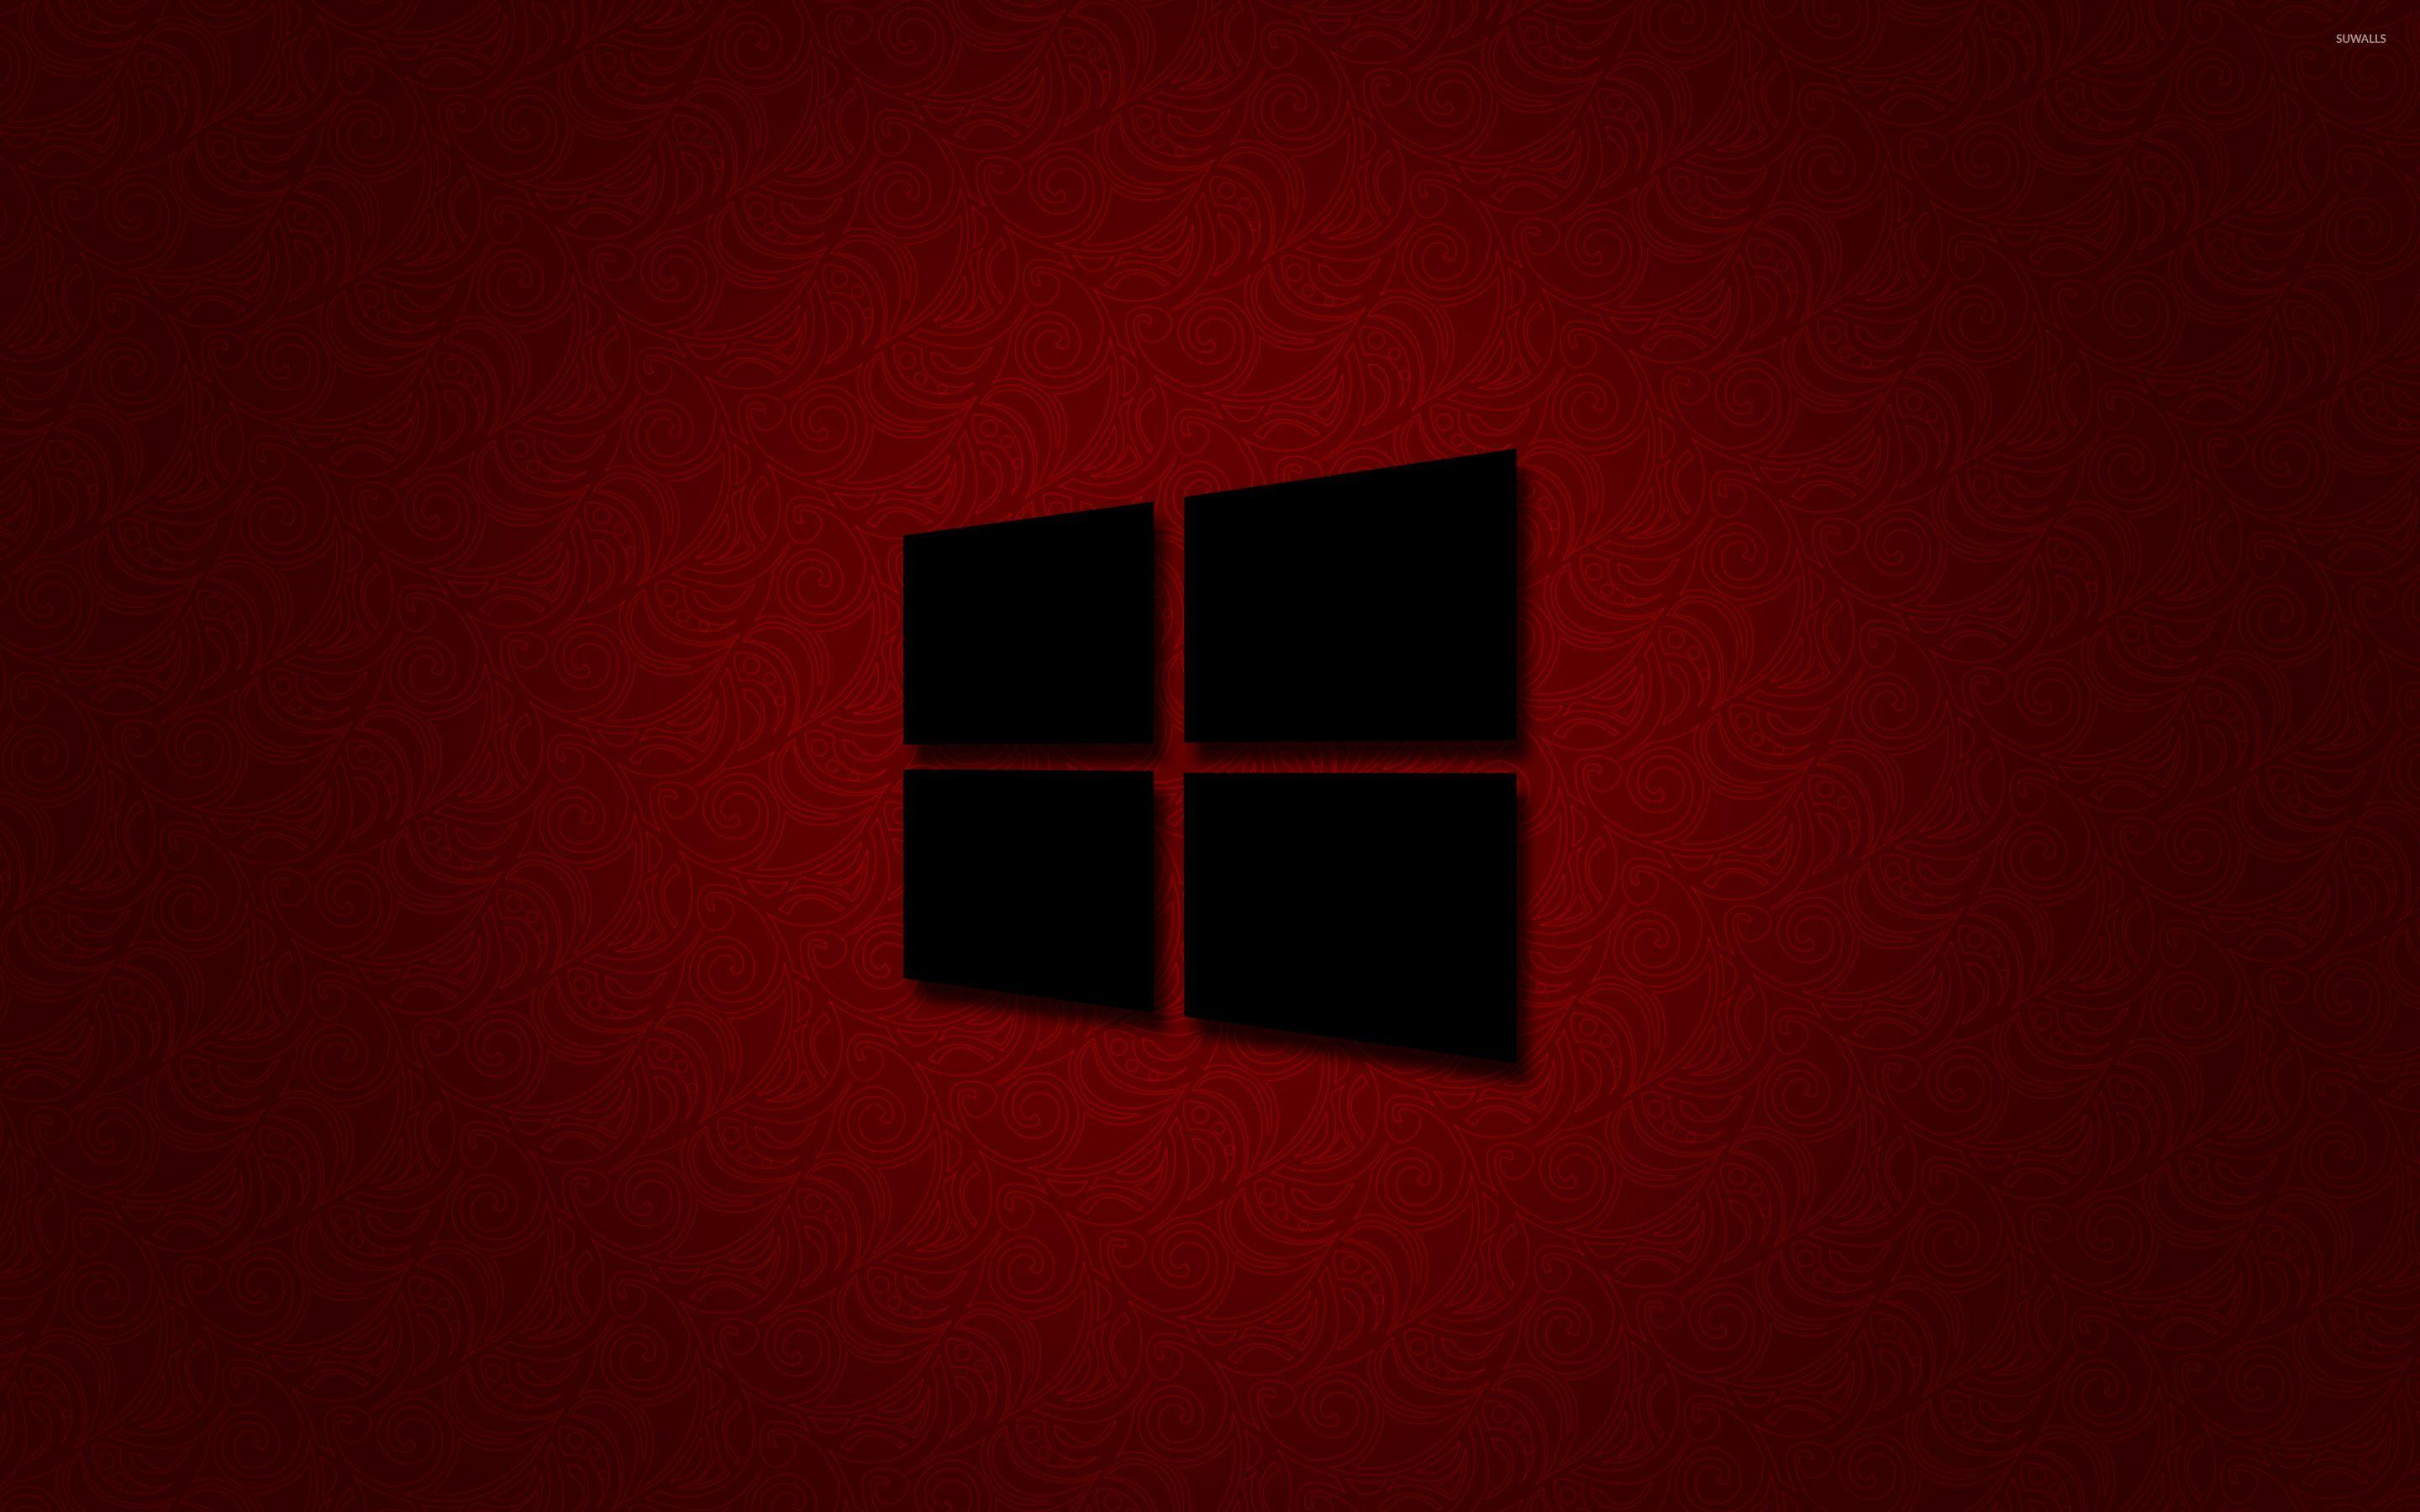 Black Windows 1.0 Logo - Windows 10 black logo on red wallpaper - Computer wallpapers - #45695